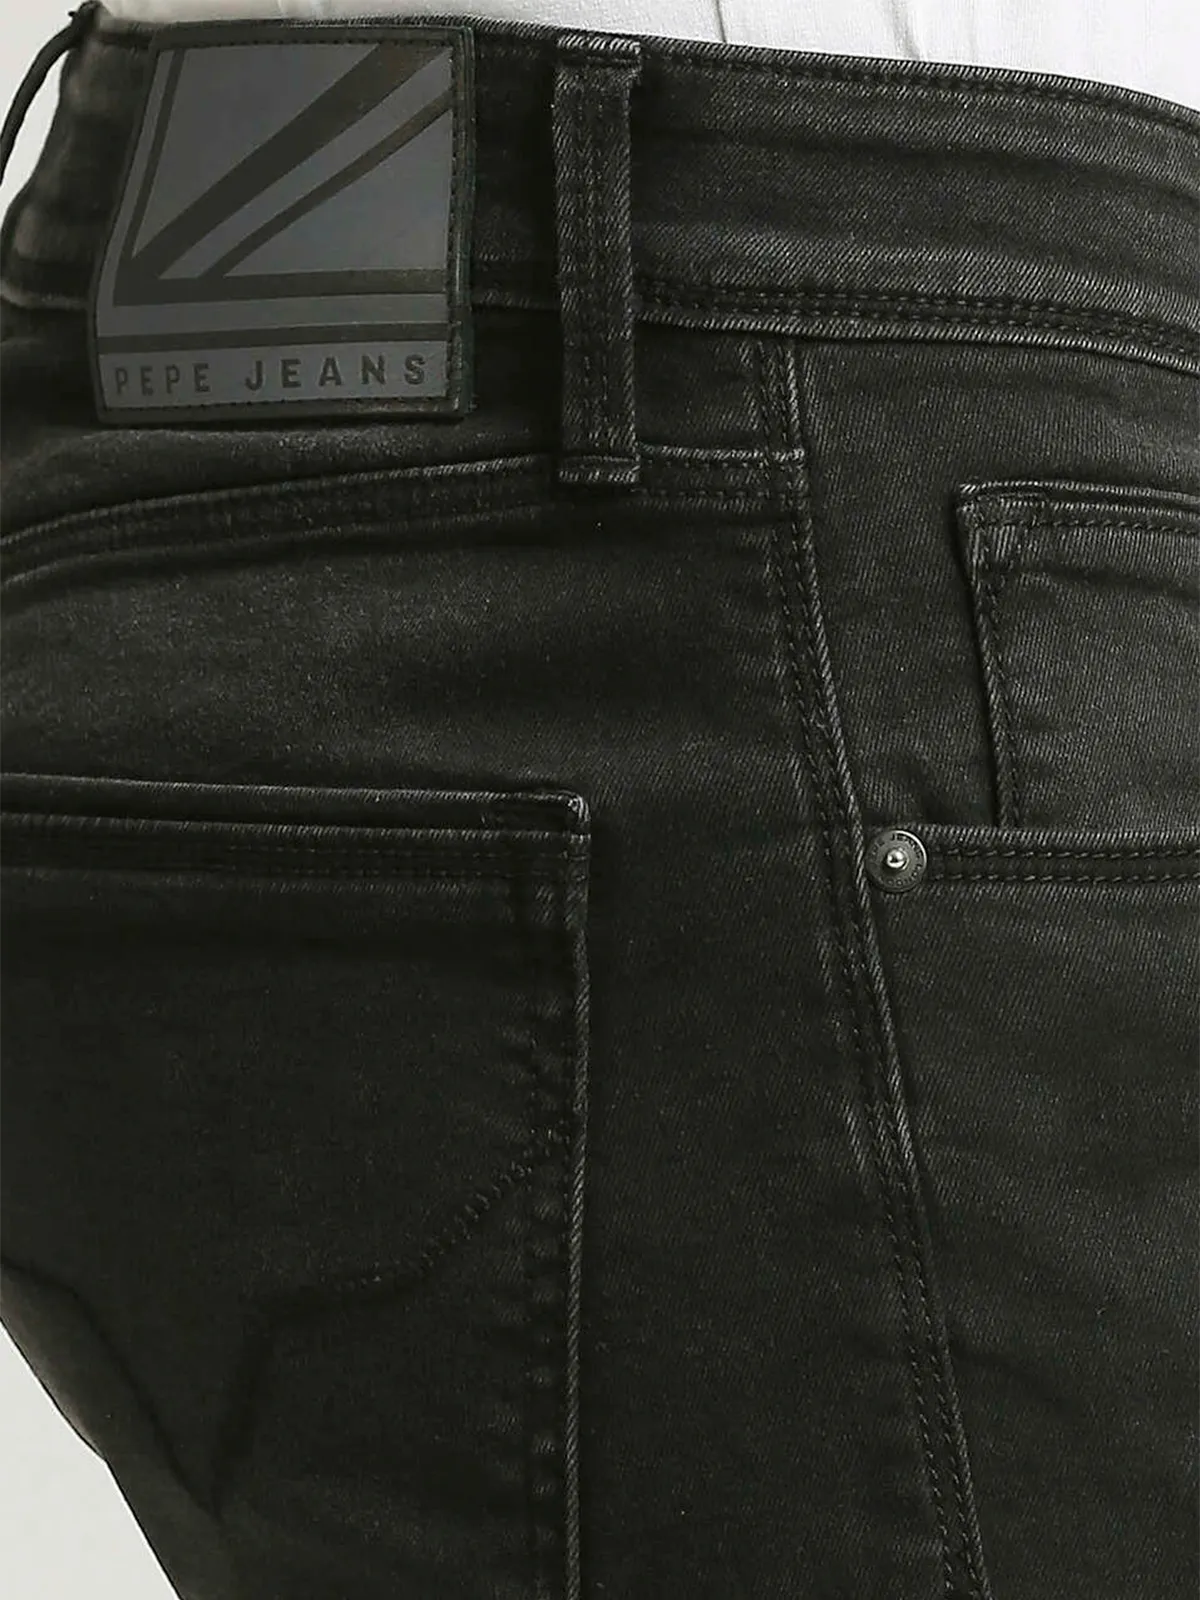 PEPE JEANS black denim washed slim fit jeans